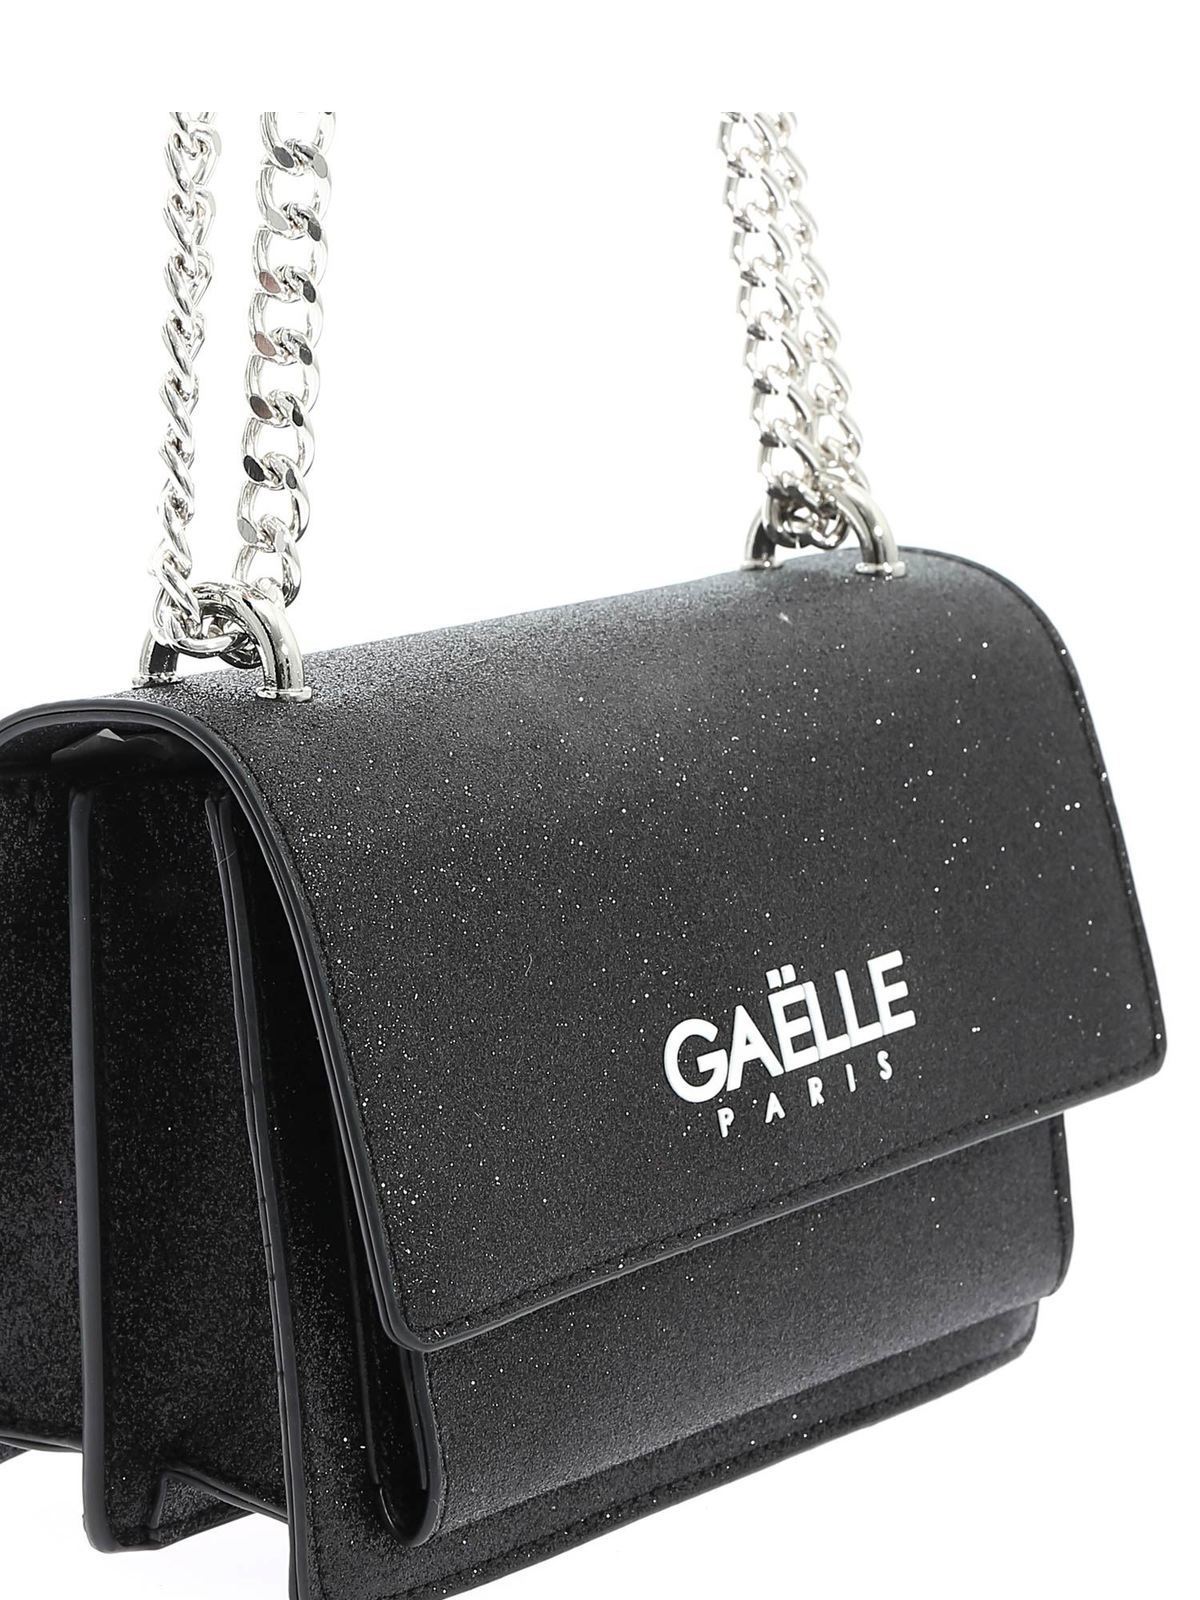 Cross body bags Gaelle Paris - Black glitter shoulder bag - GBDA2506NERO